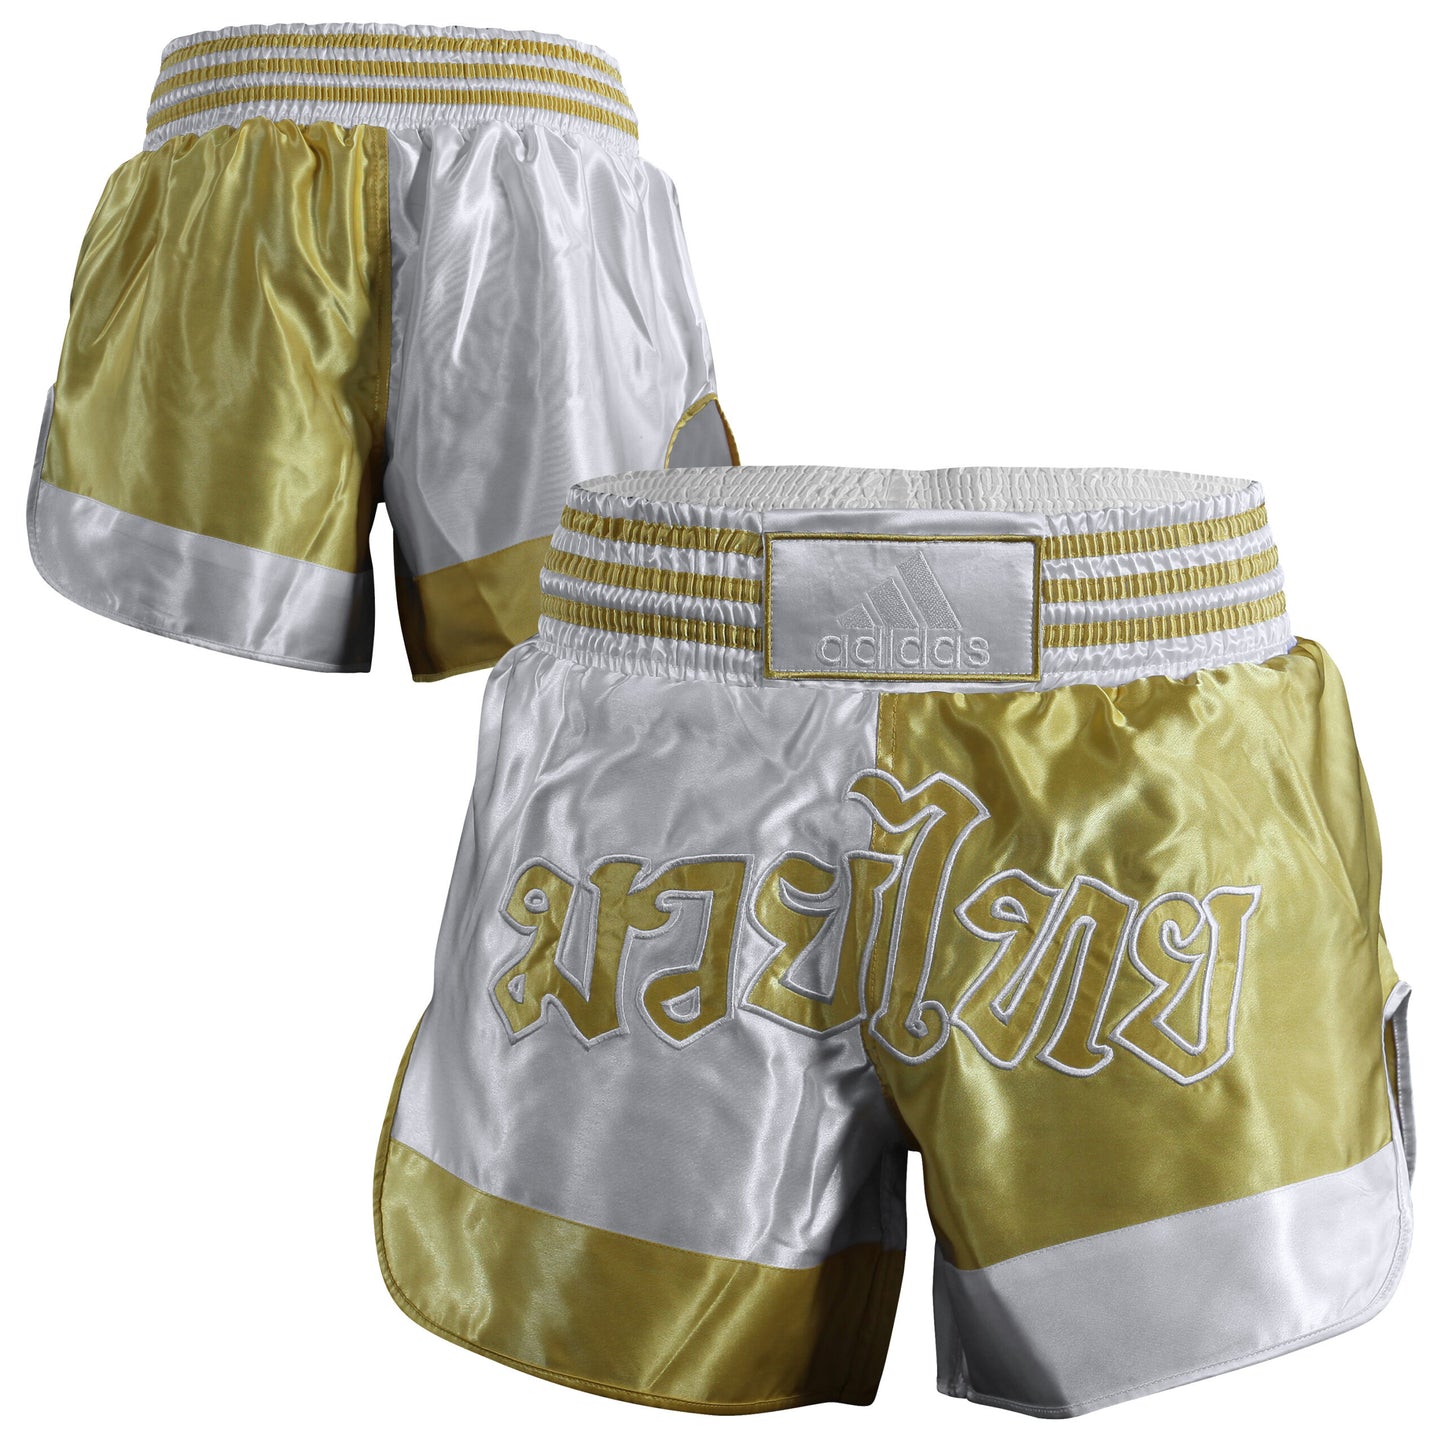 Adisth03 Adidas Muay Thai Boxing Shorts White Gold 01